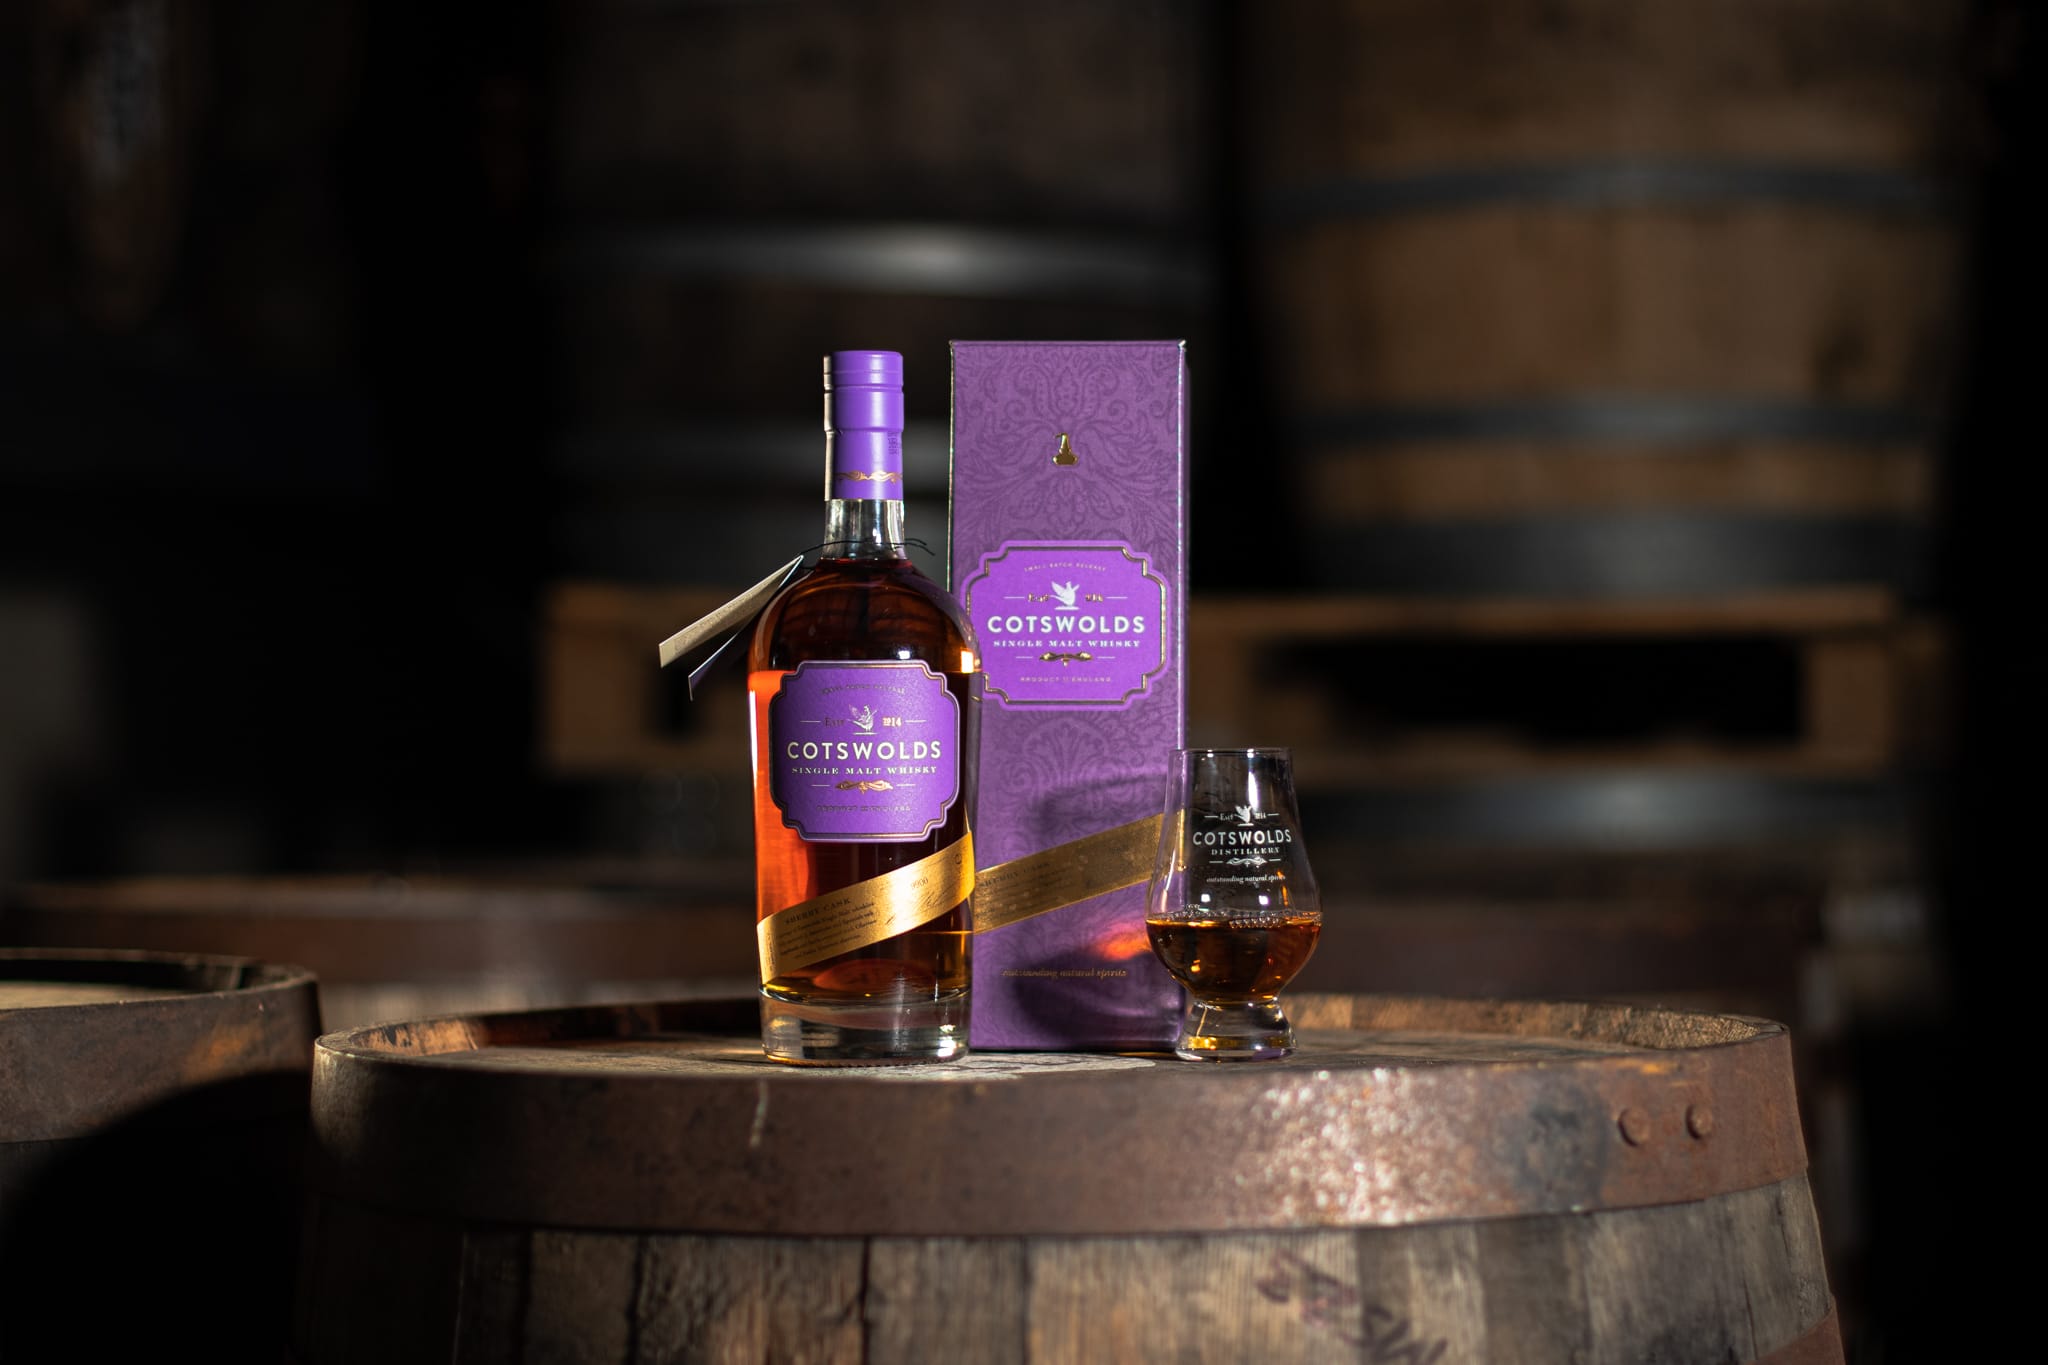 Review of Cotswolds Distillery's Sherry Cask Single Malt Whisky